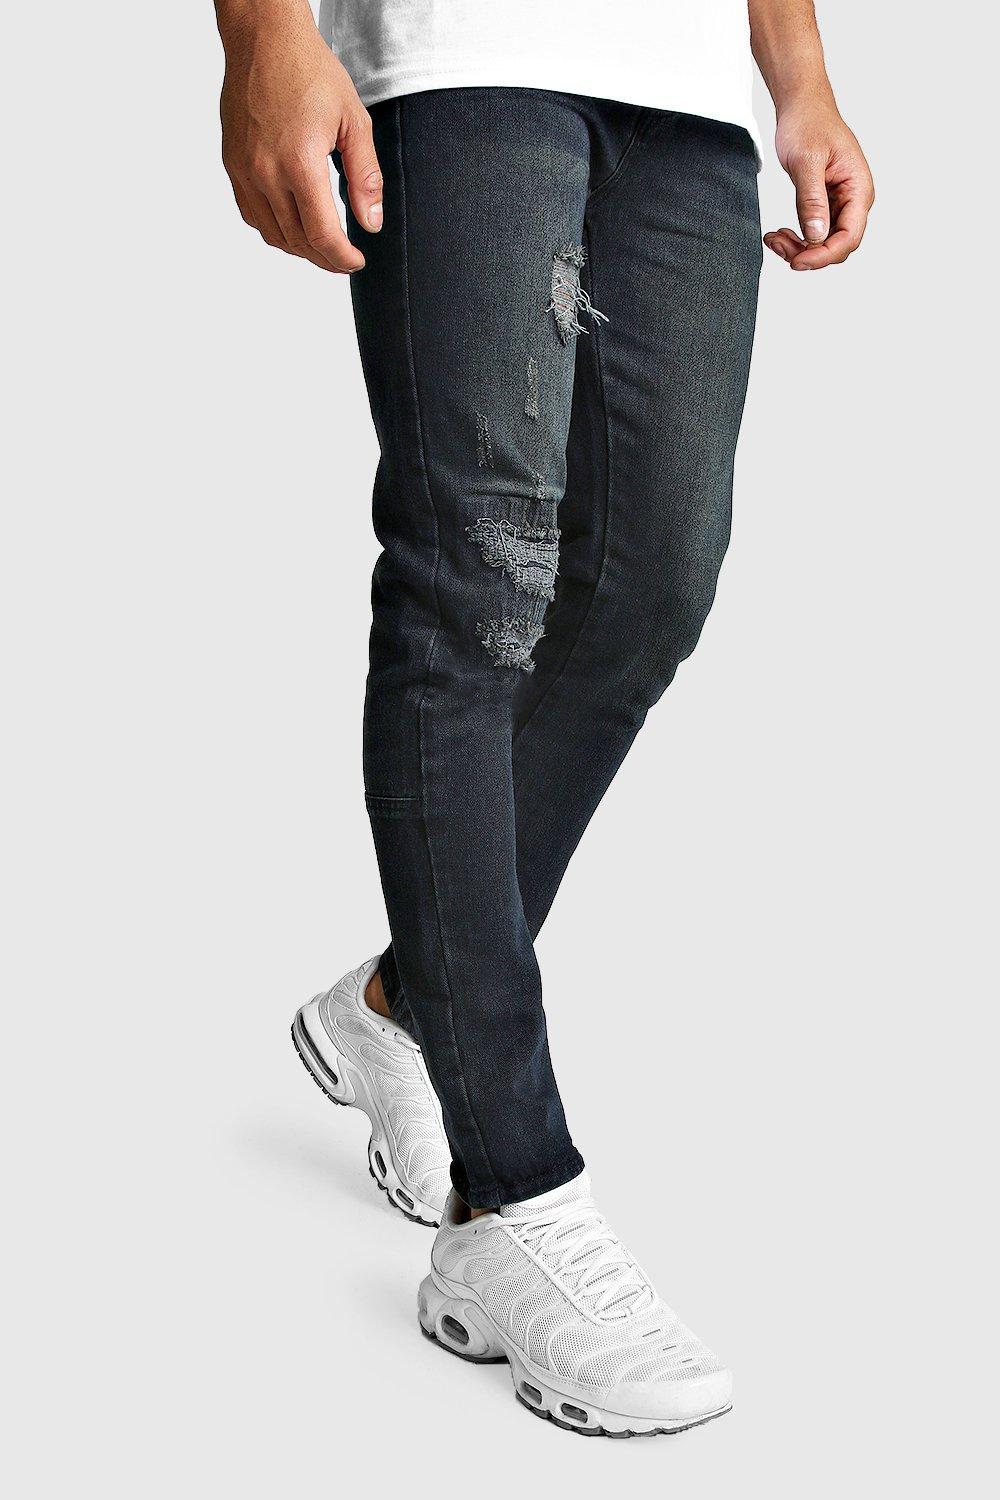 boohooman super skinny jeans